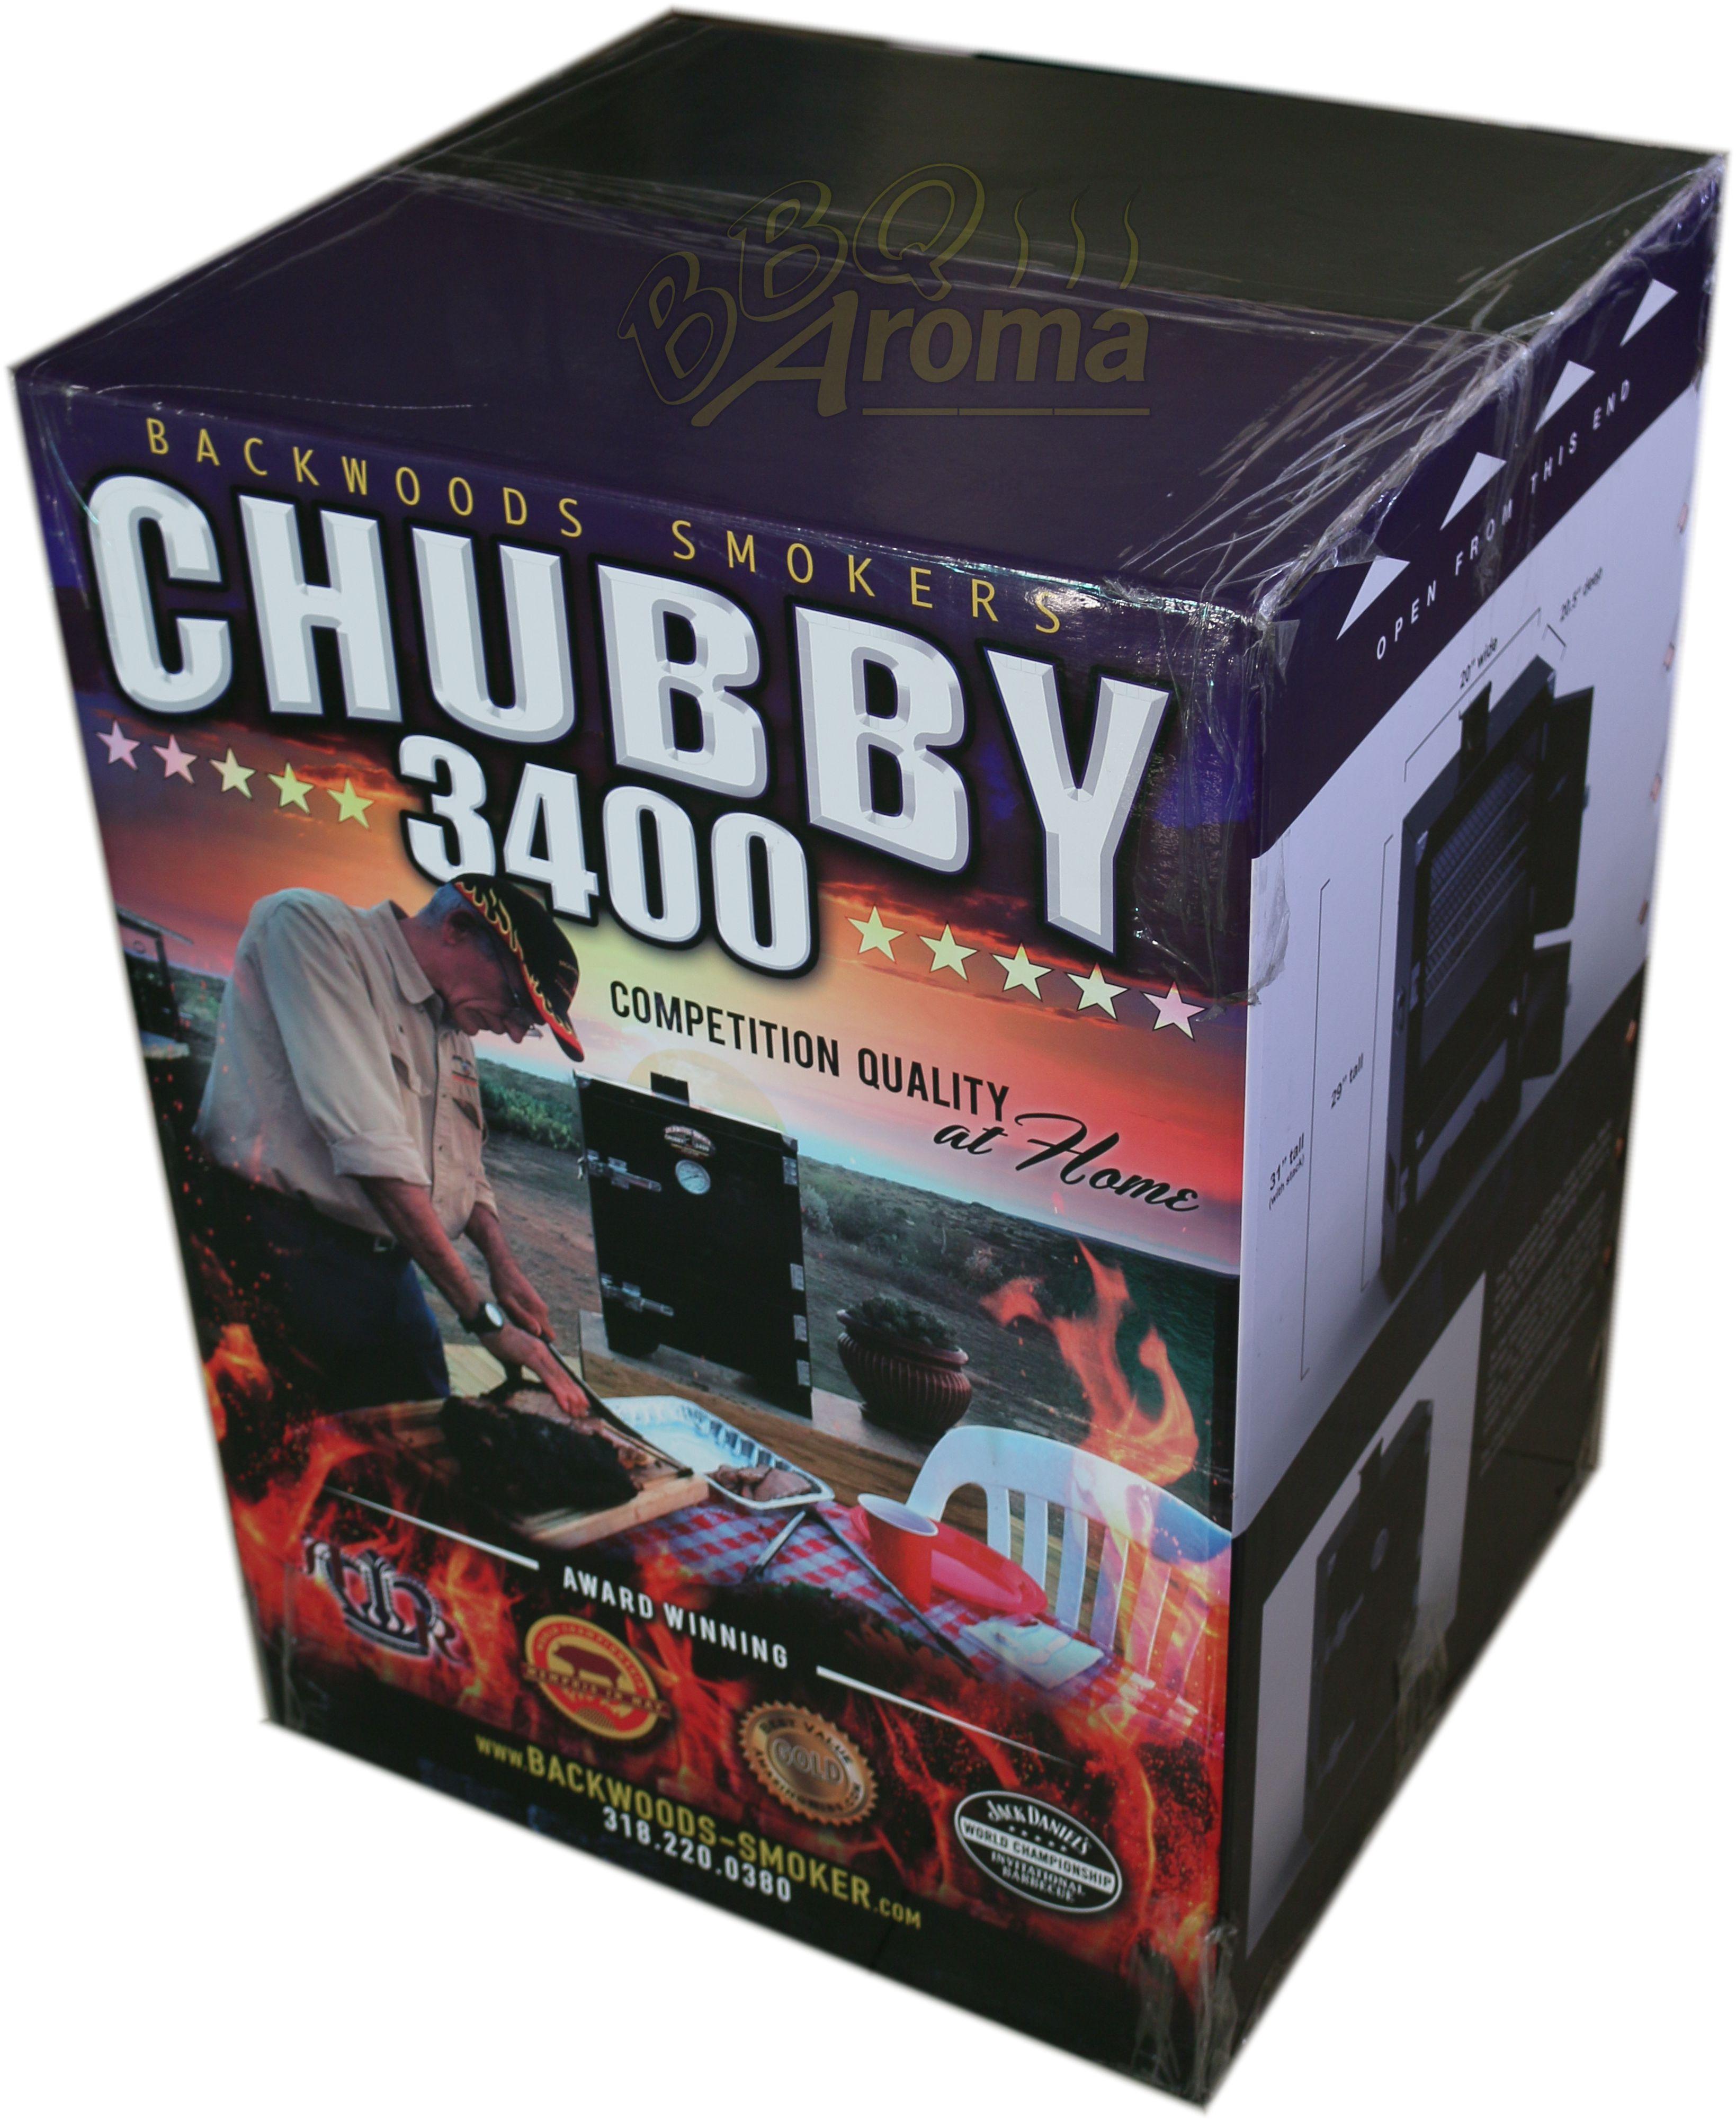 Chubby 3400 Retail Box